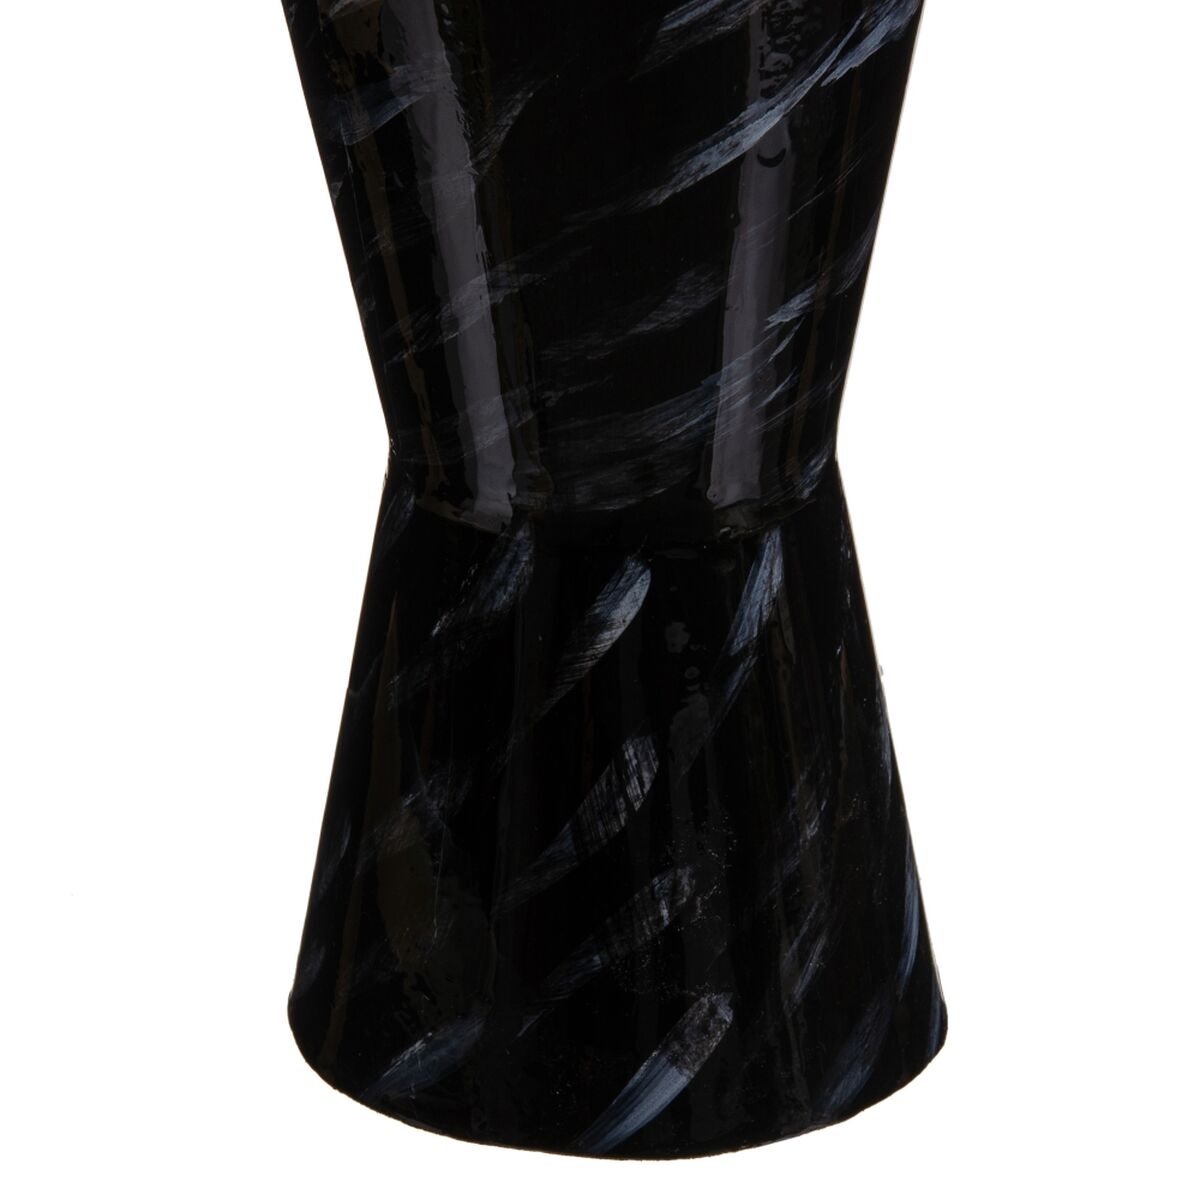 Vase 18 x 18 x 58 cm Crystal Black Golden Metal